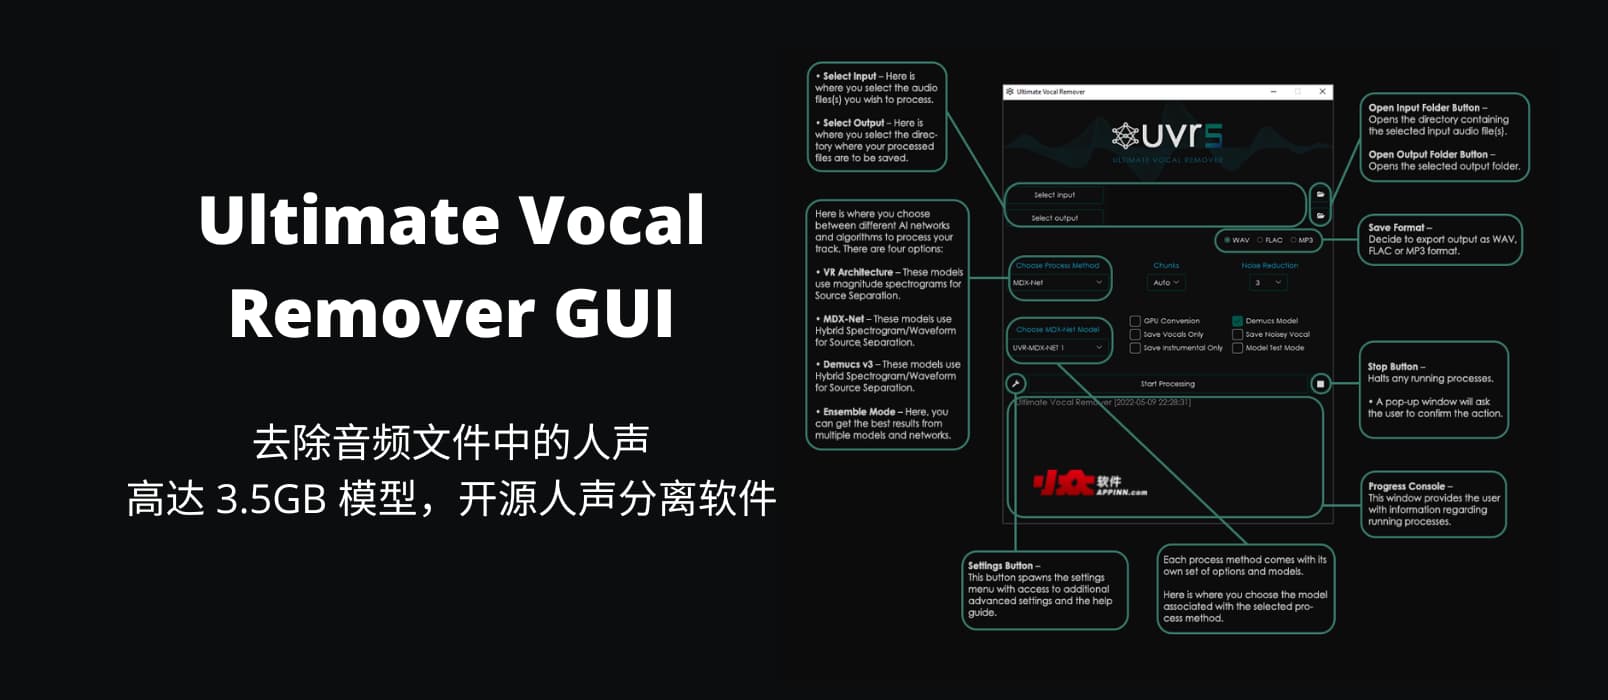 Ultimate Vocal Remover GUI - 去除音频文件中的人声，高达 3.5GB 模型的开源人声分离软件